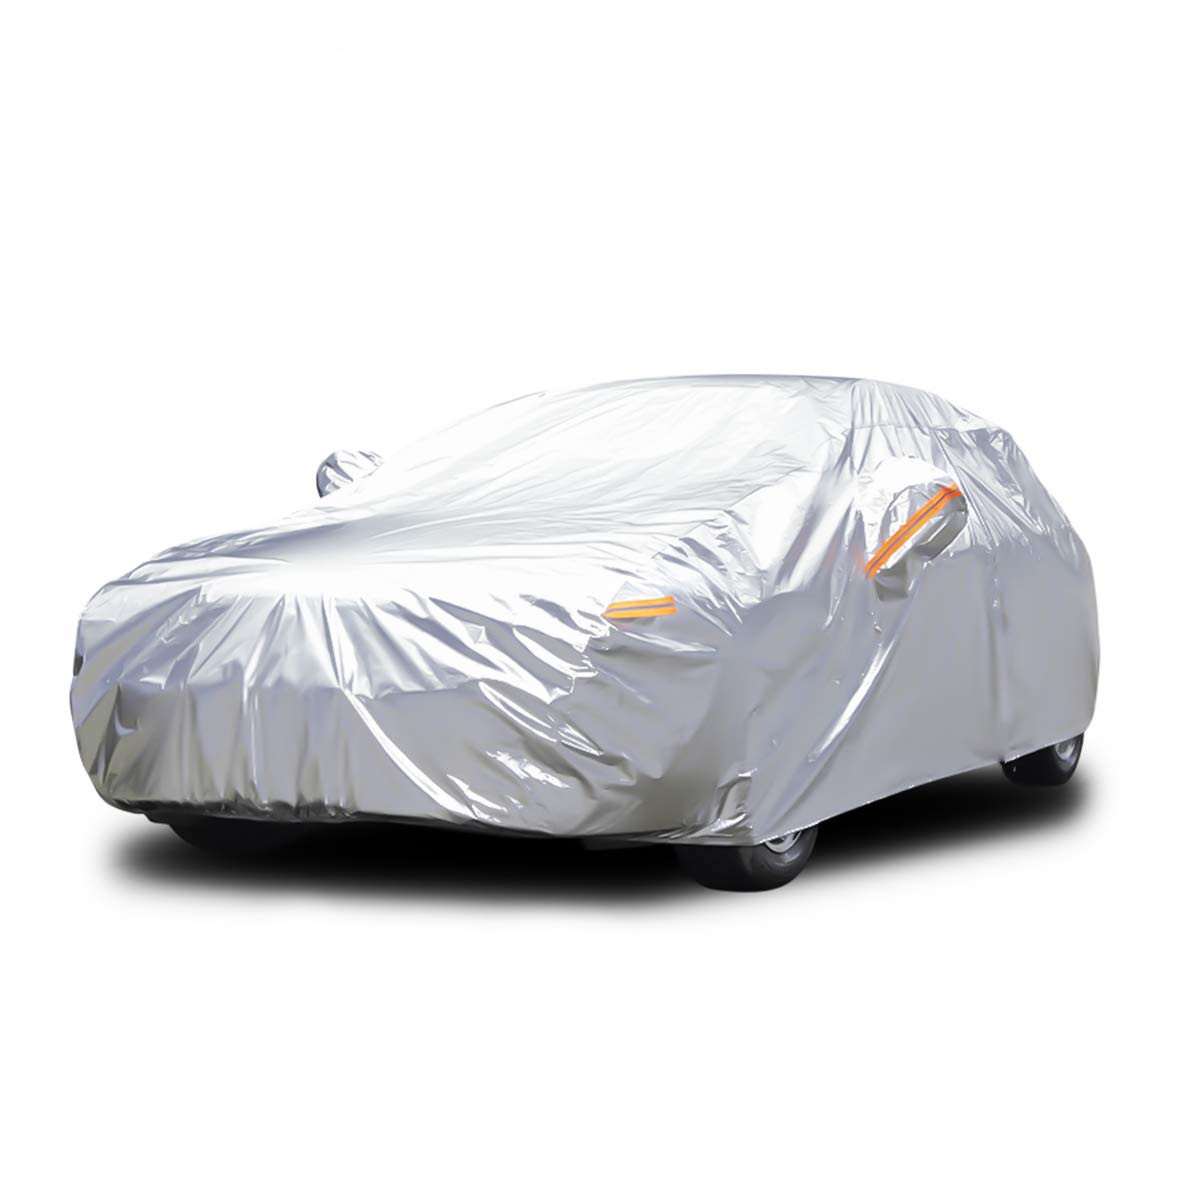 1* Car Cover Sun Dust Protection Anti UV lightweight Silver For Sedan Size L-XXL